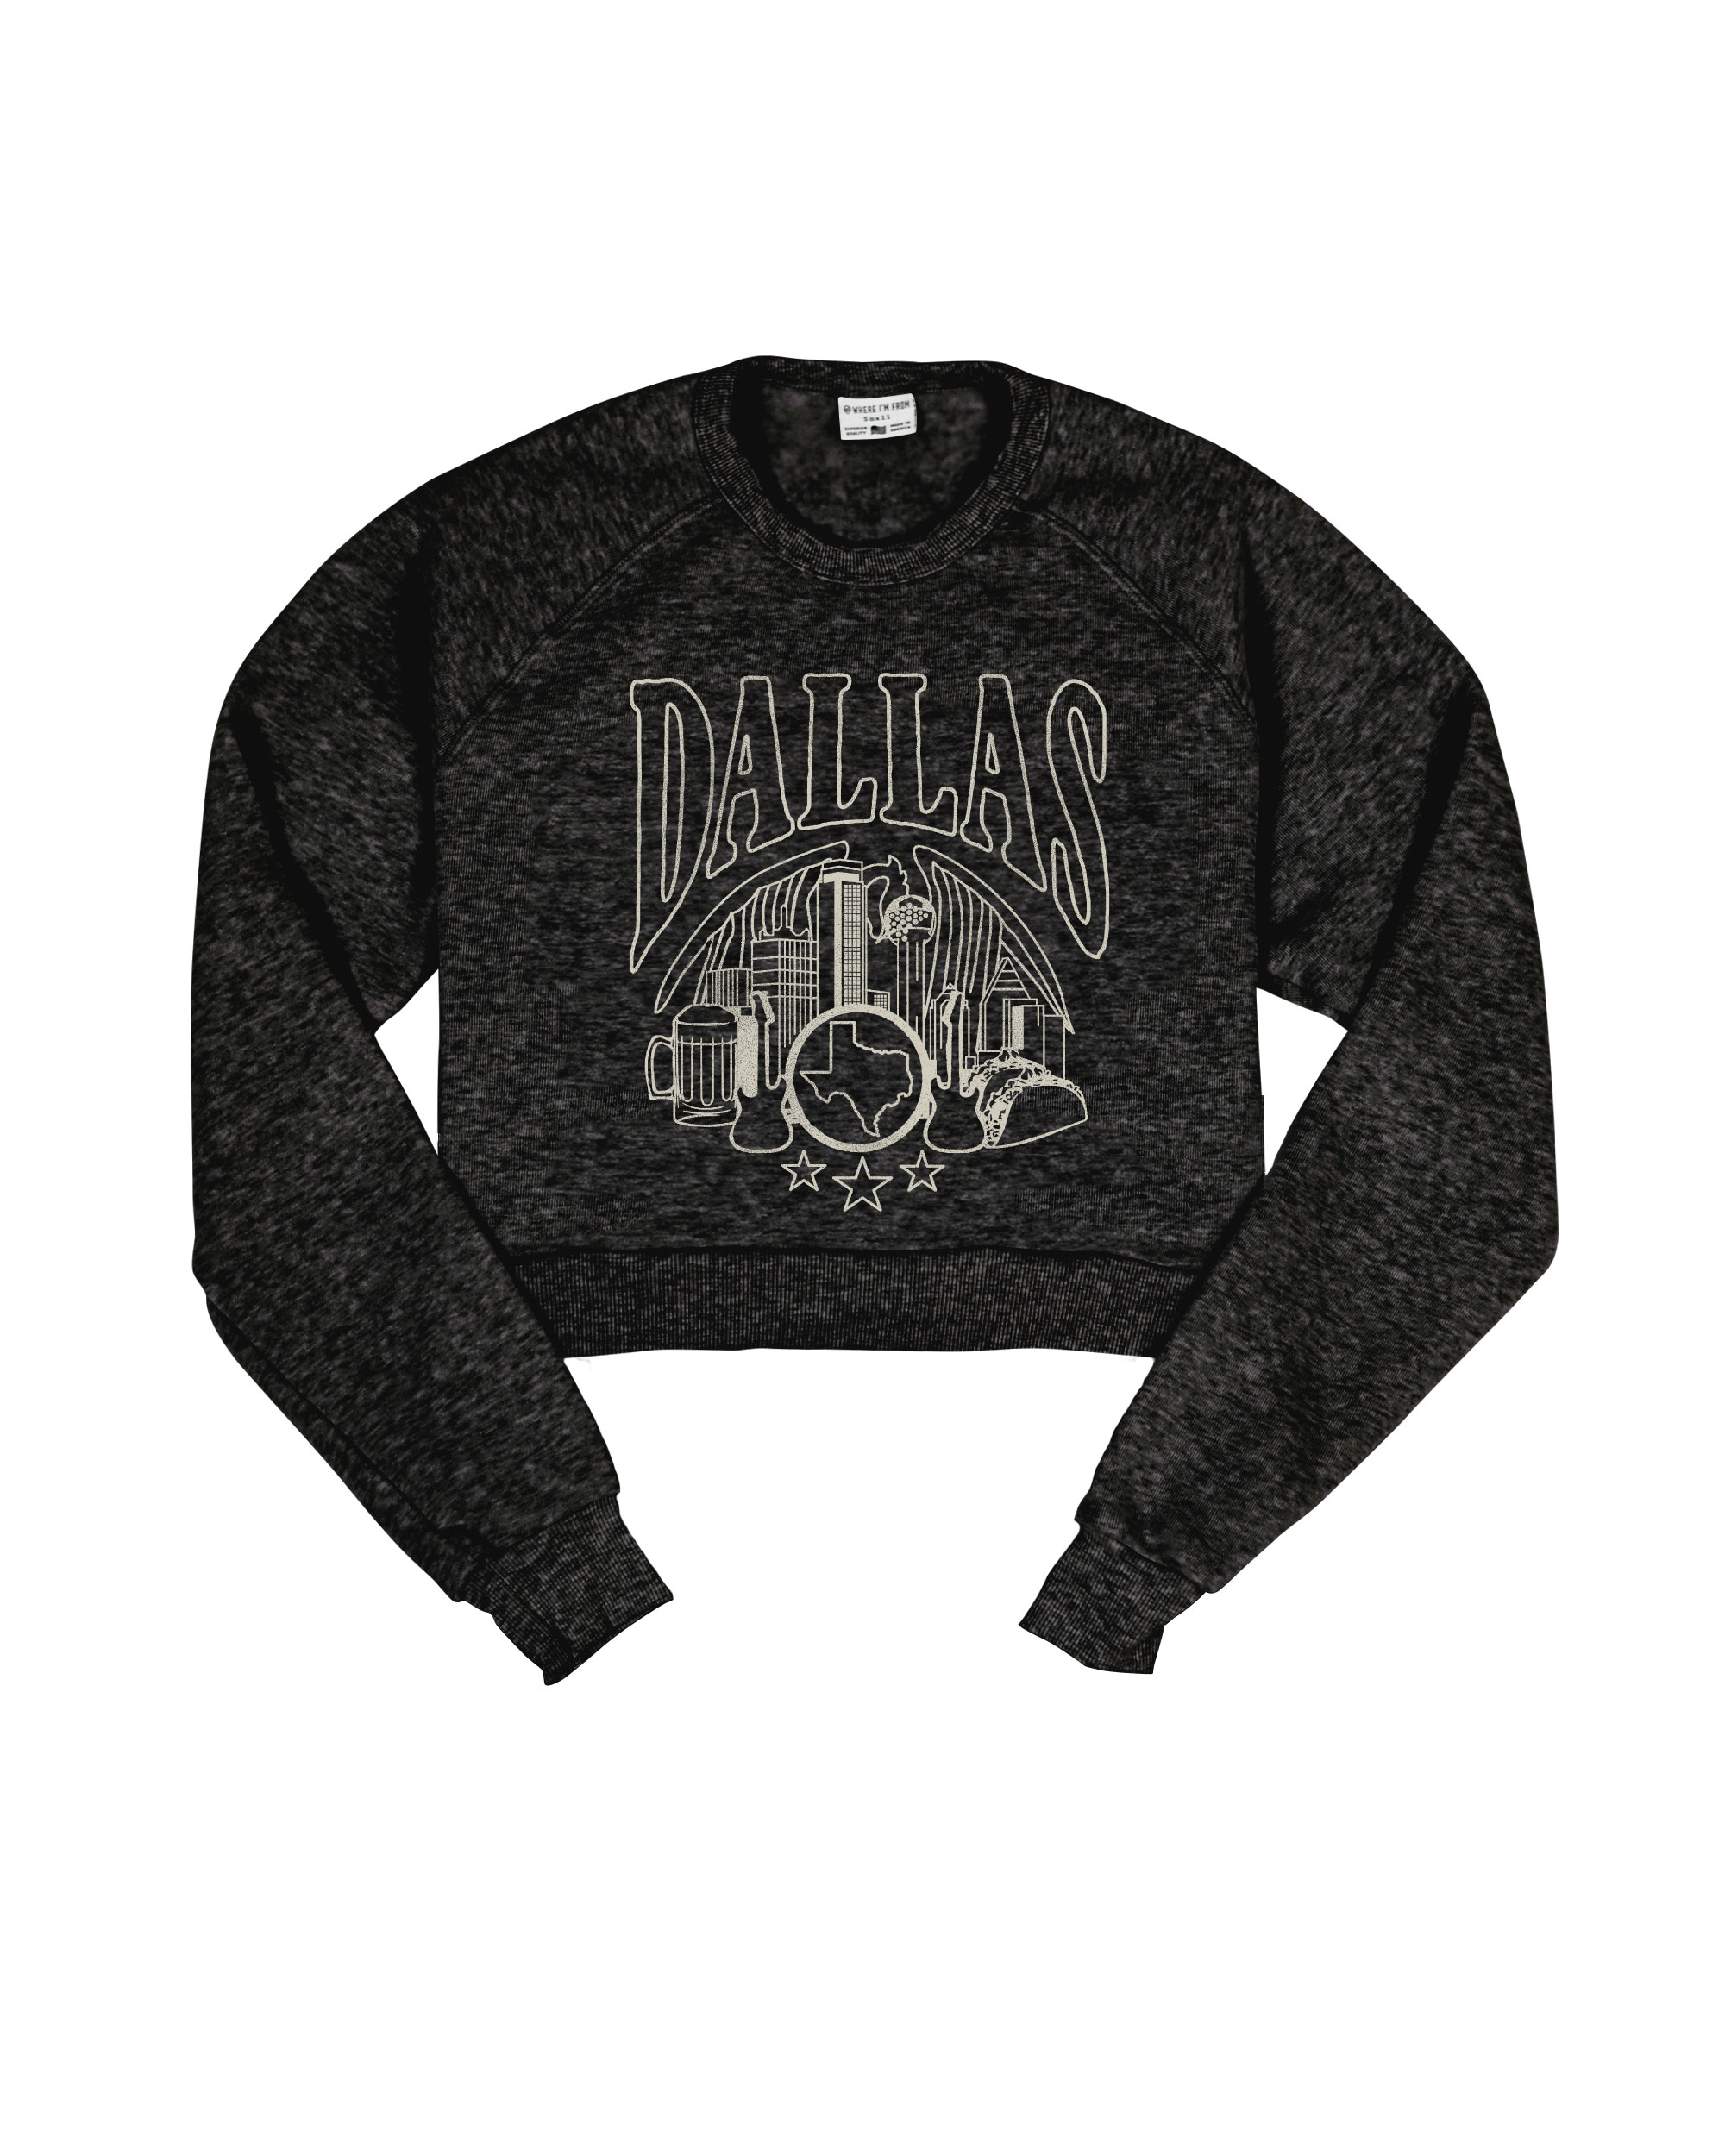 Dallas Tour Black Crop Sweatshirt